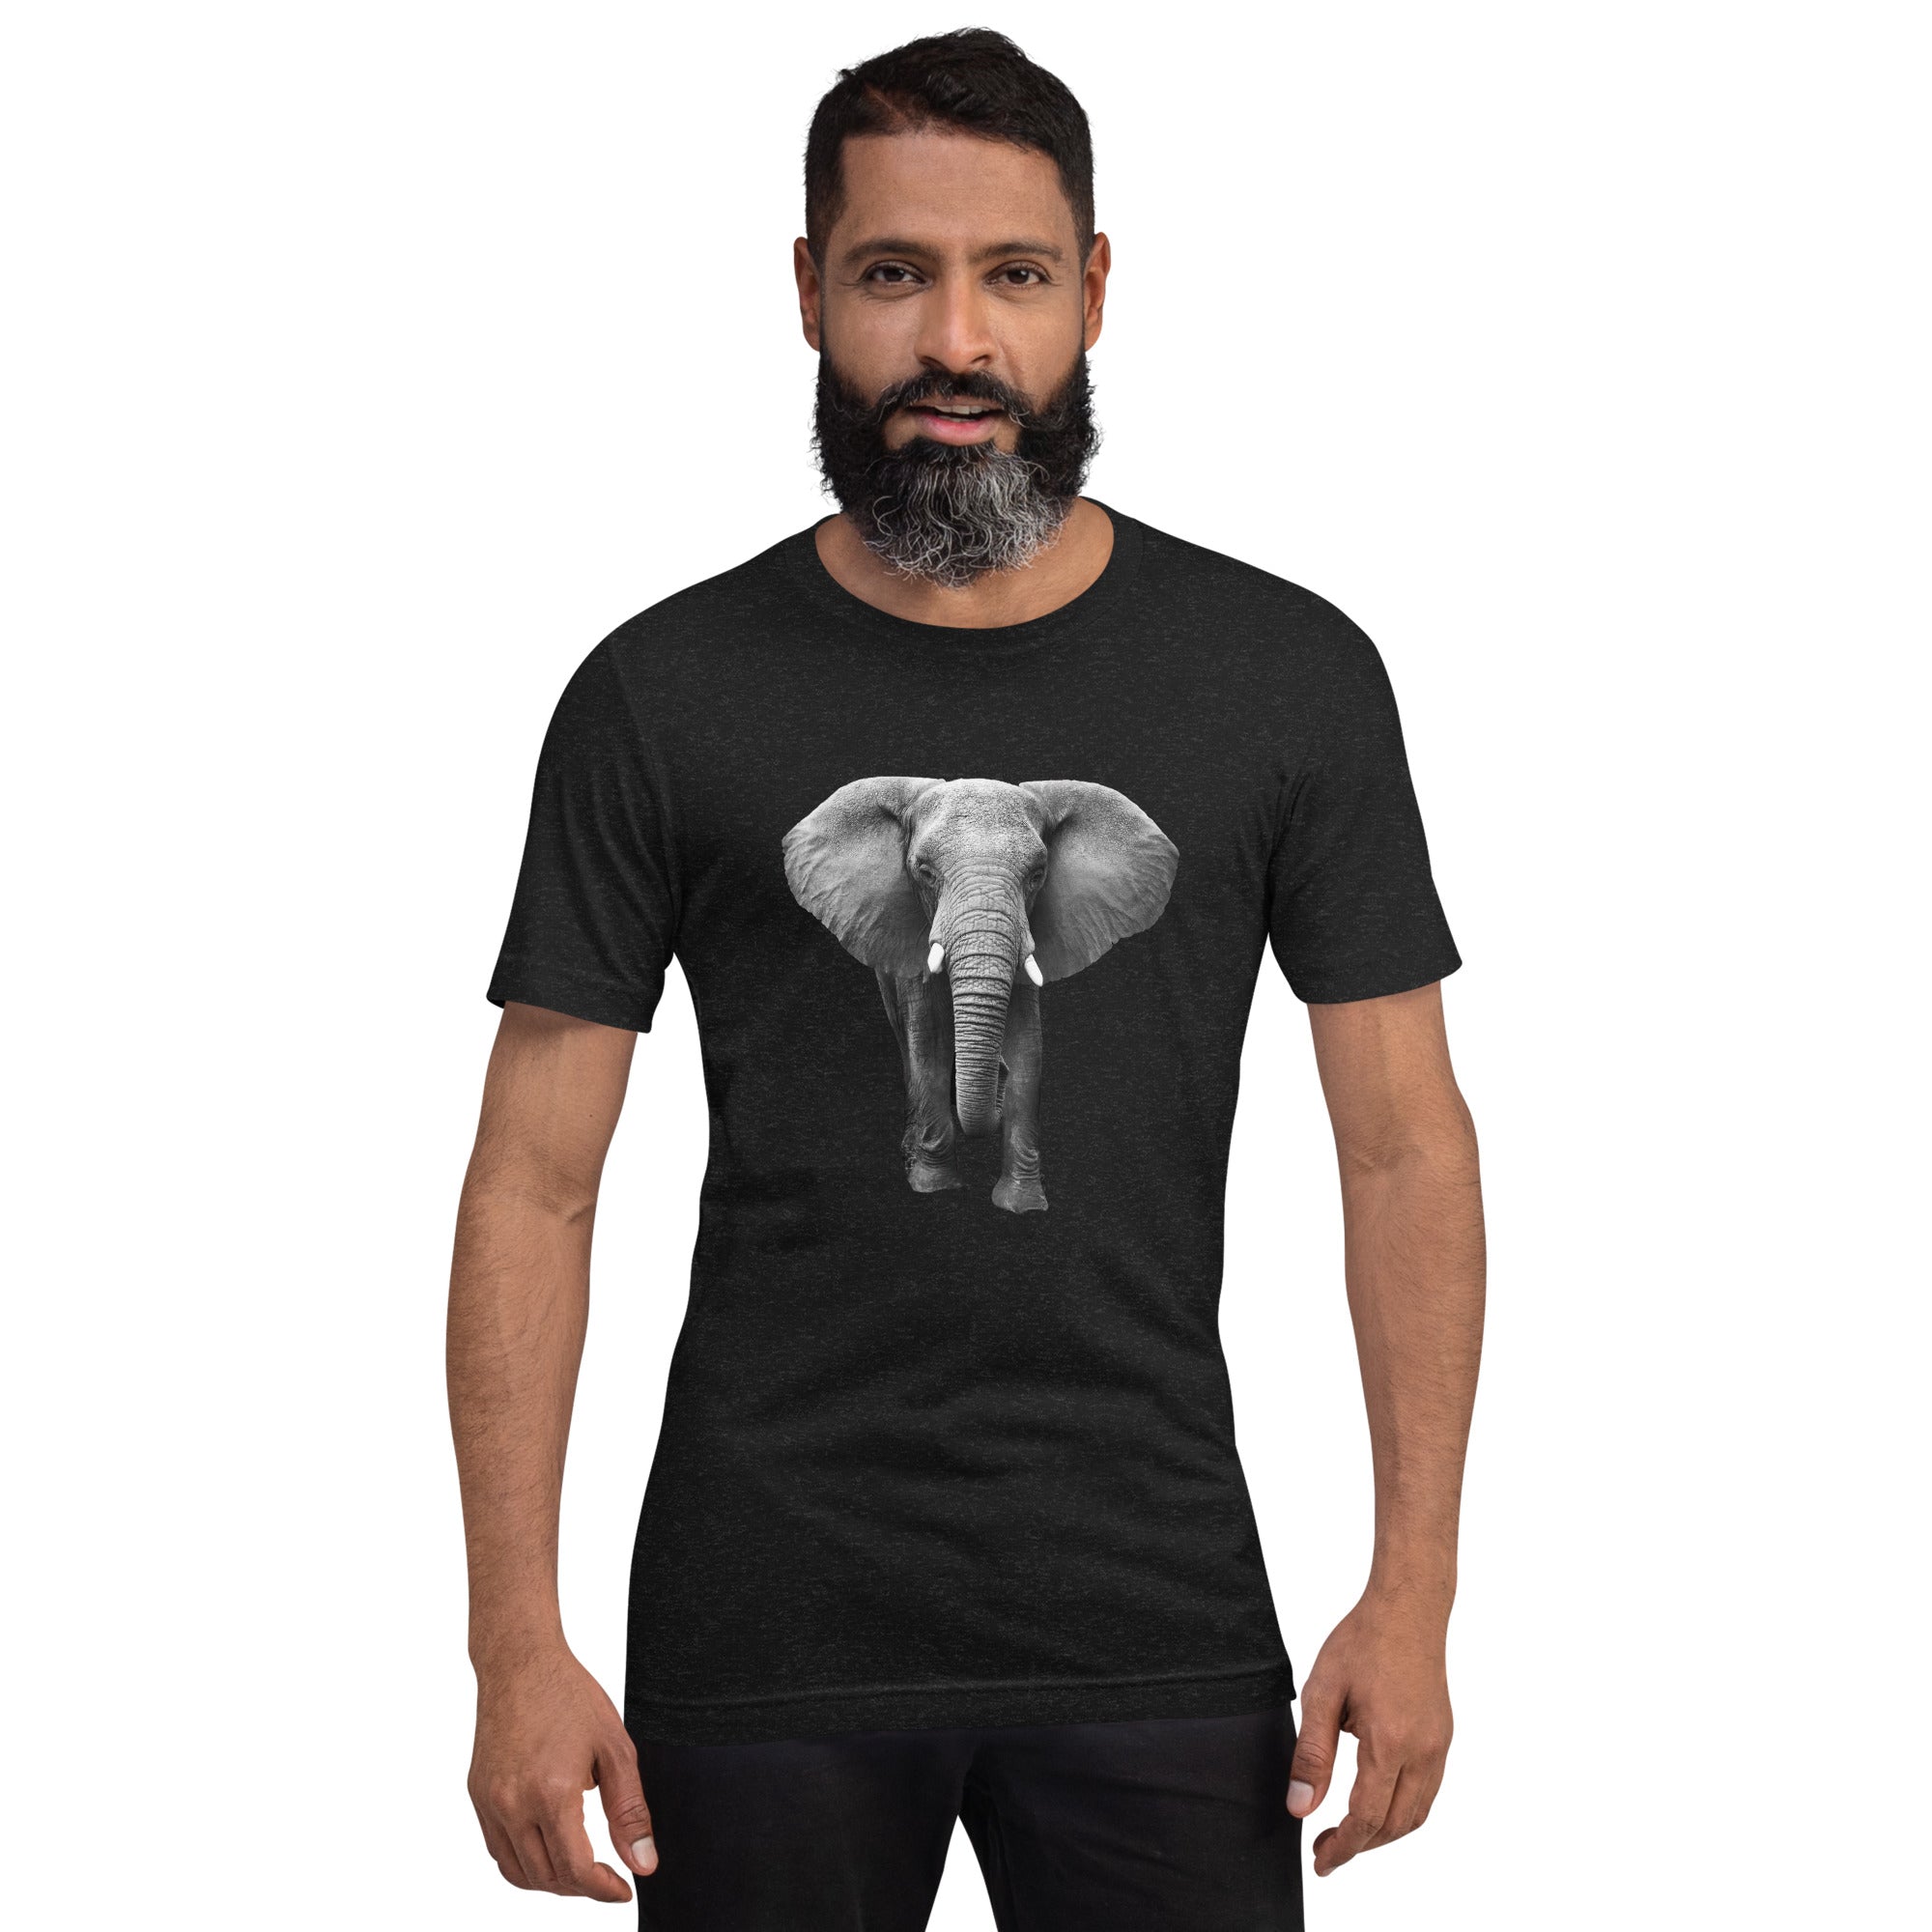 Elephant on a black t-shirt